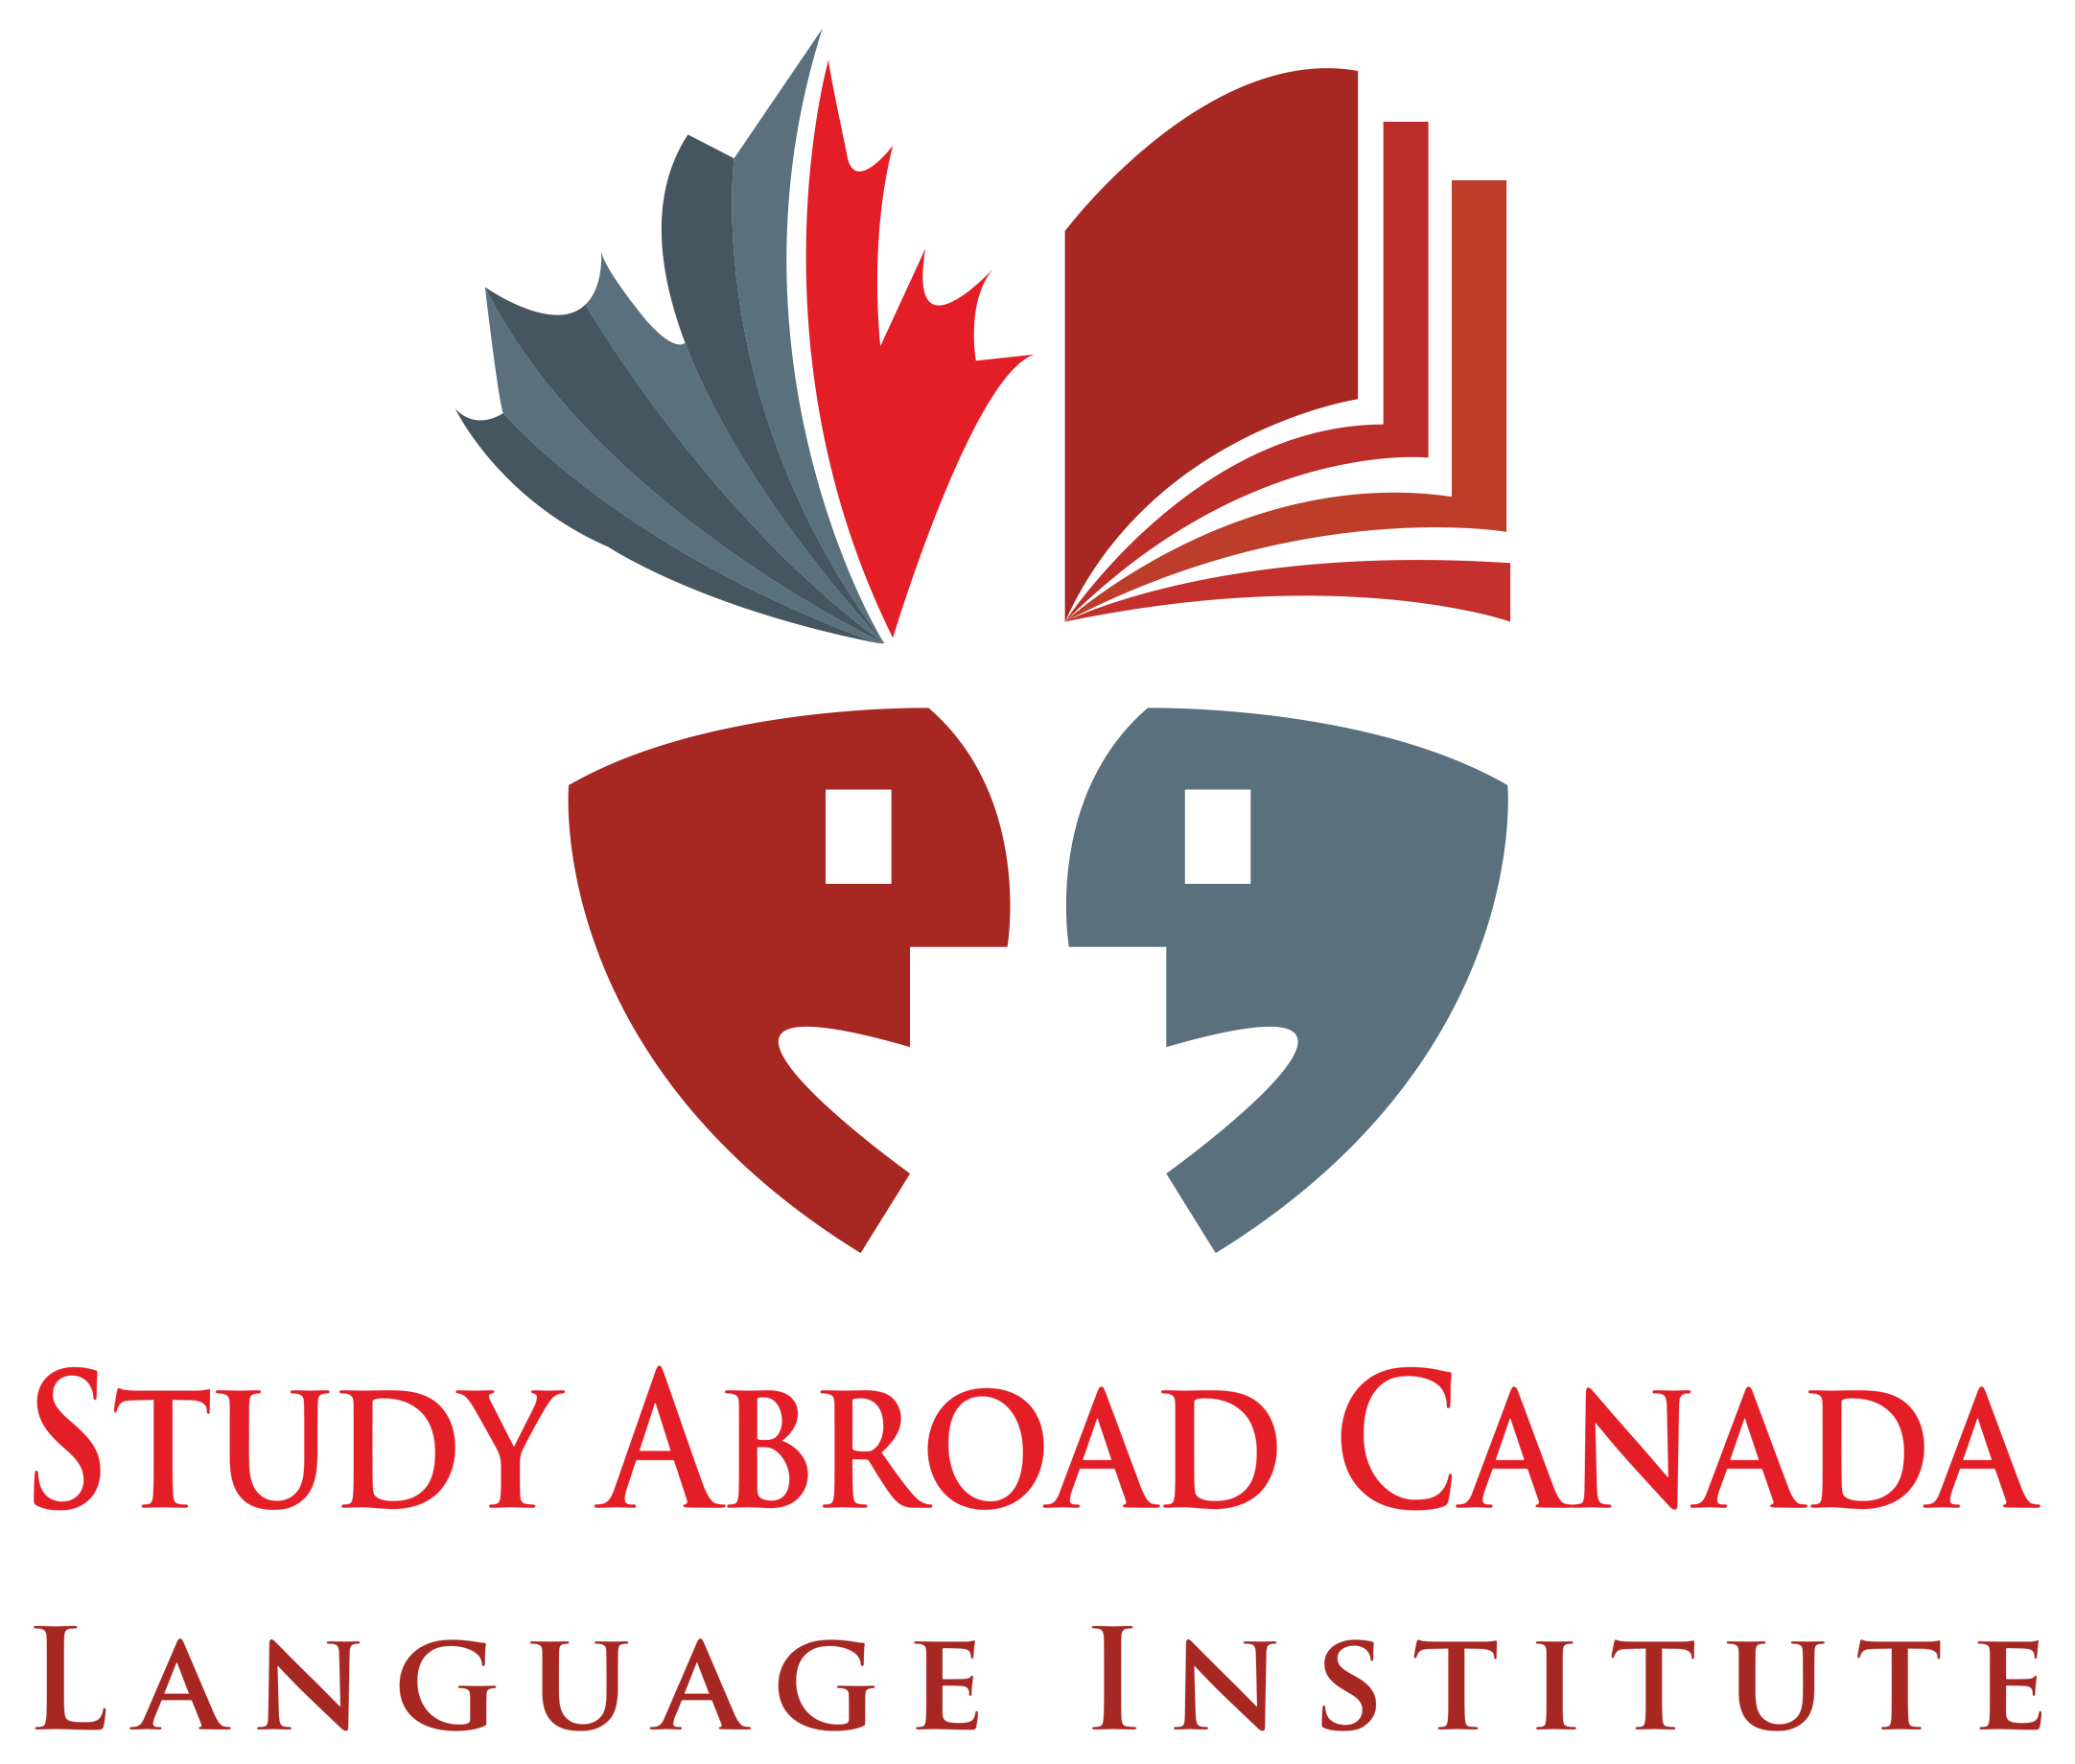 Study Abroad Canada Language Institute (SACLI)